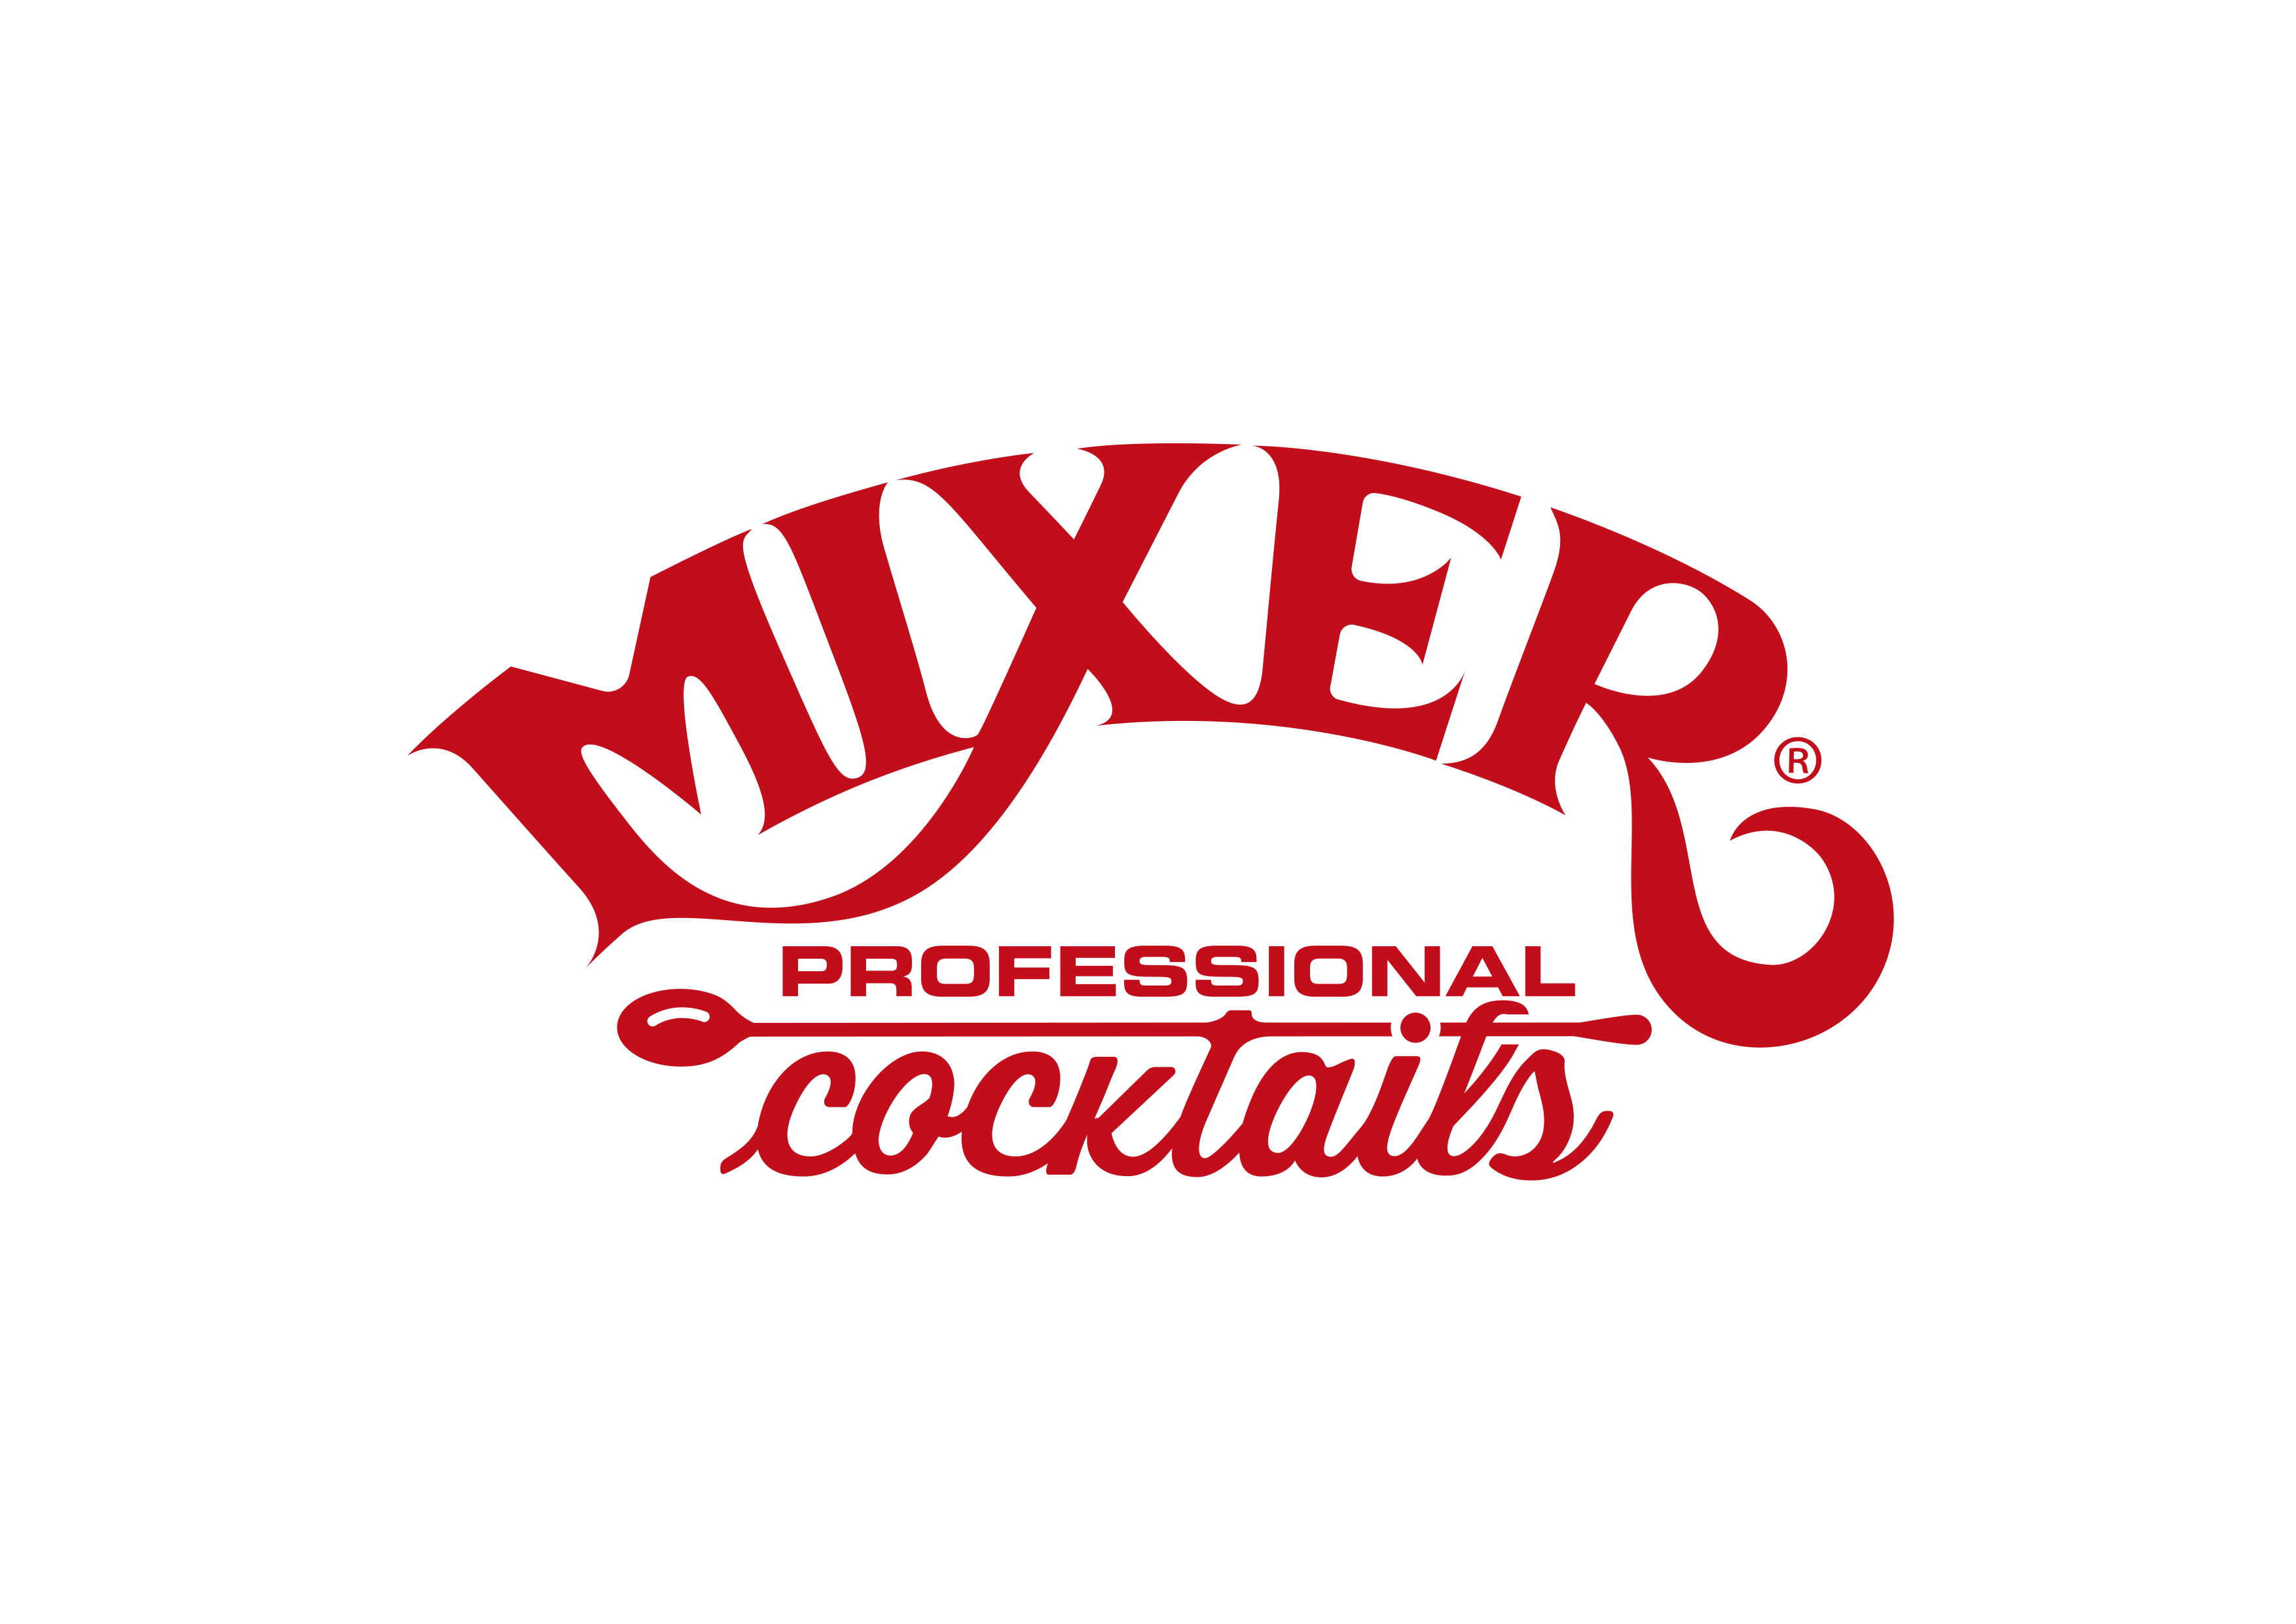 Mixer Cocktails